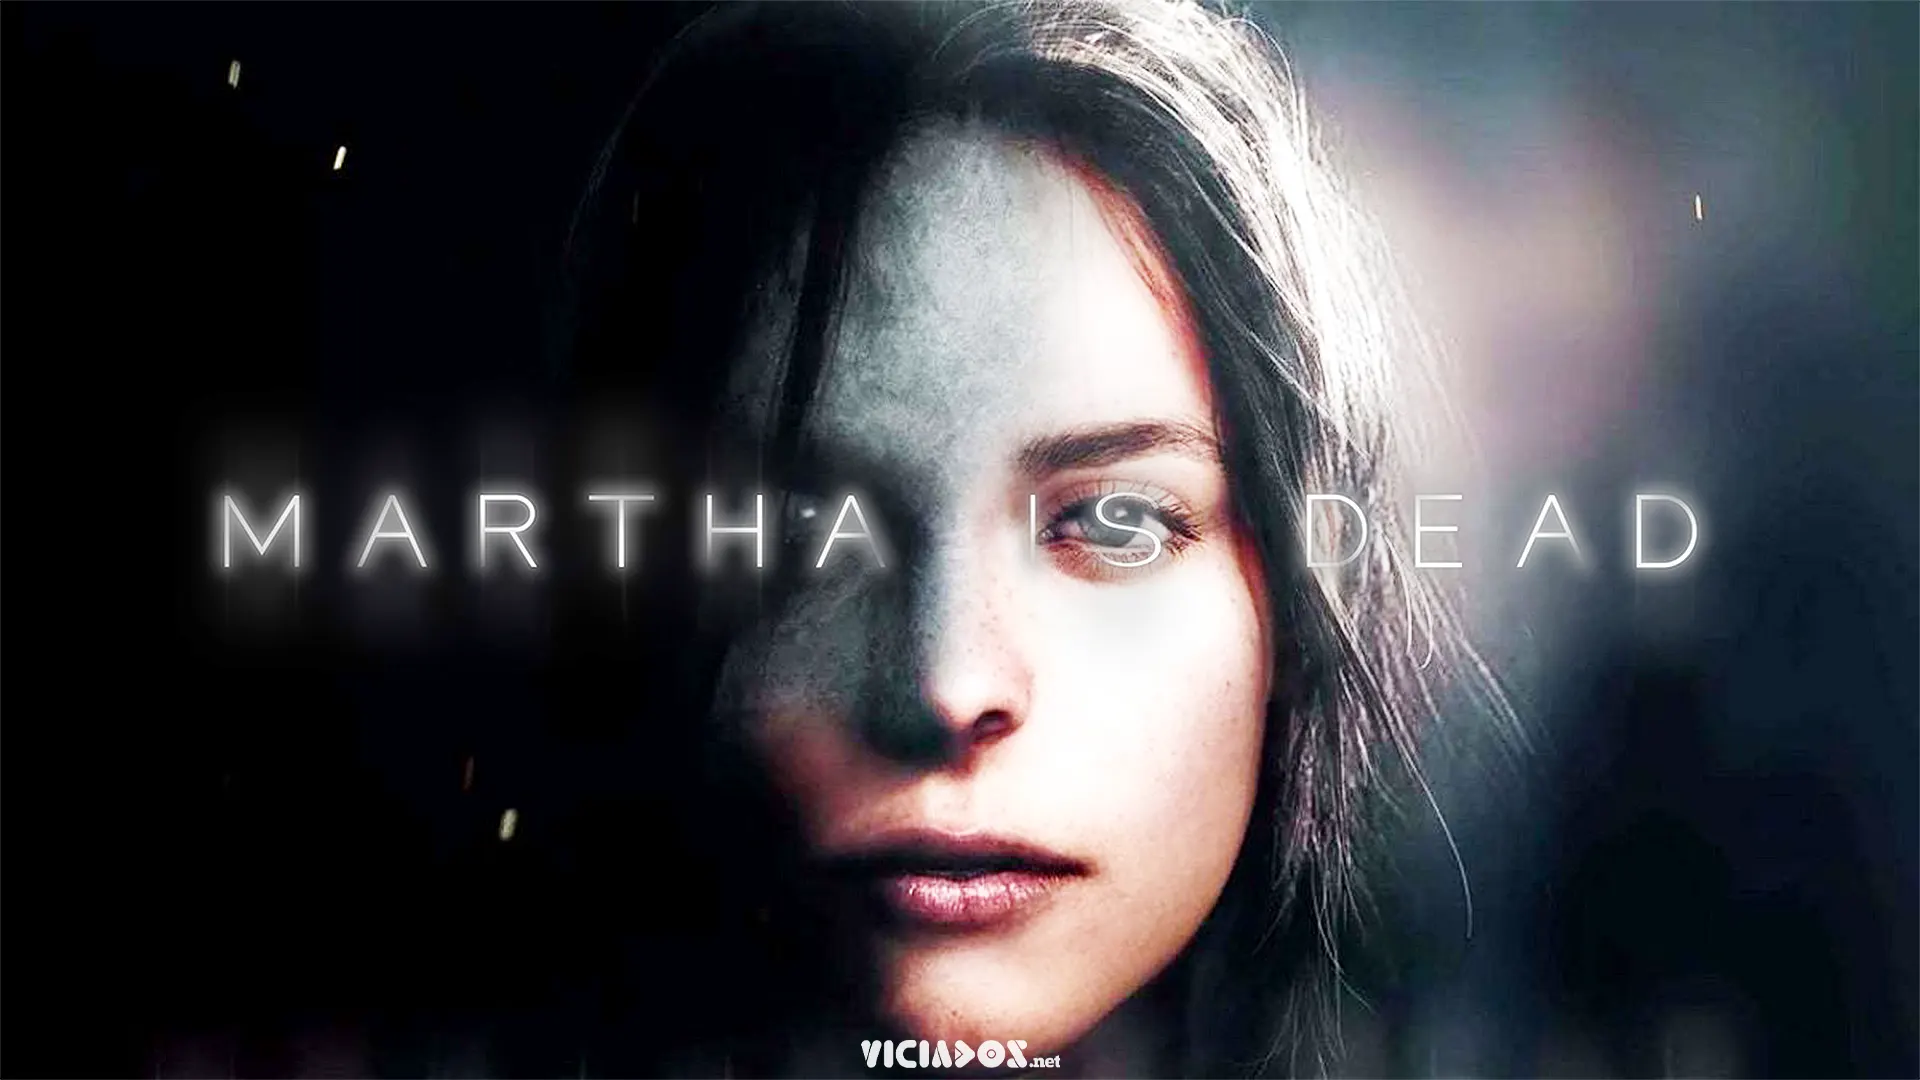 Martha is Dead foi censurado no PlayStation; Saiba o motivo! 2022 Viciados